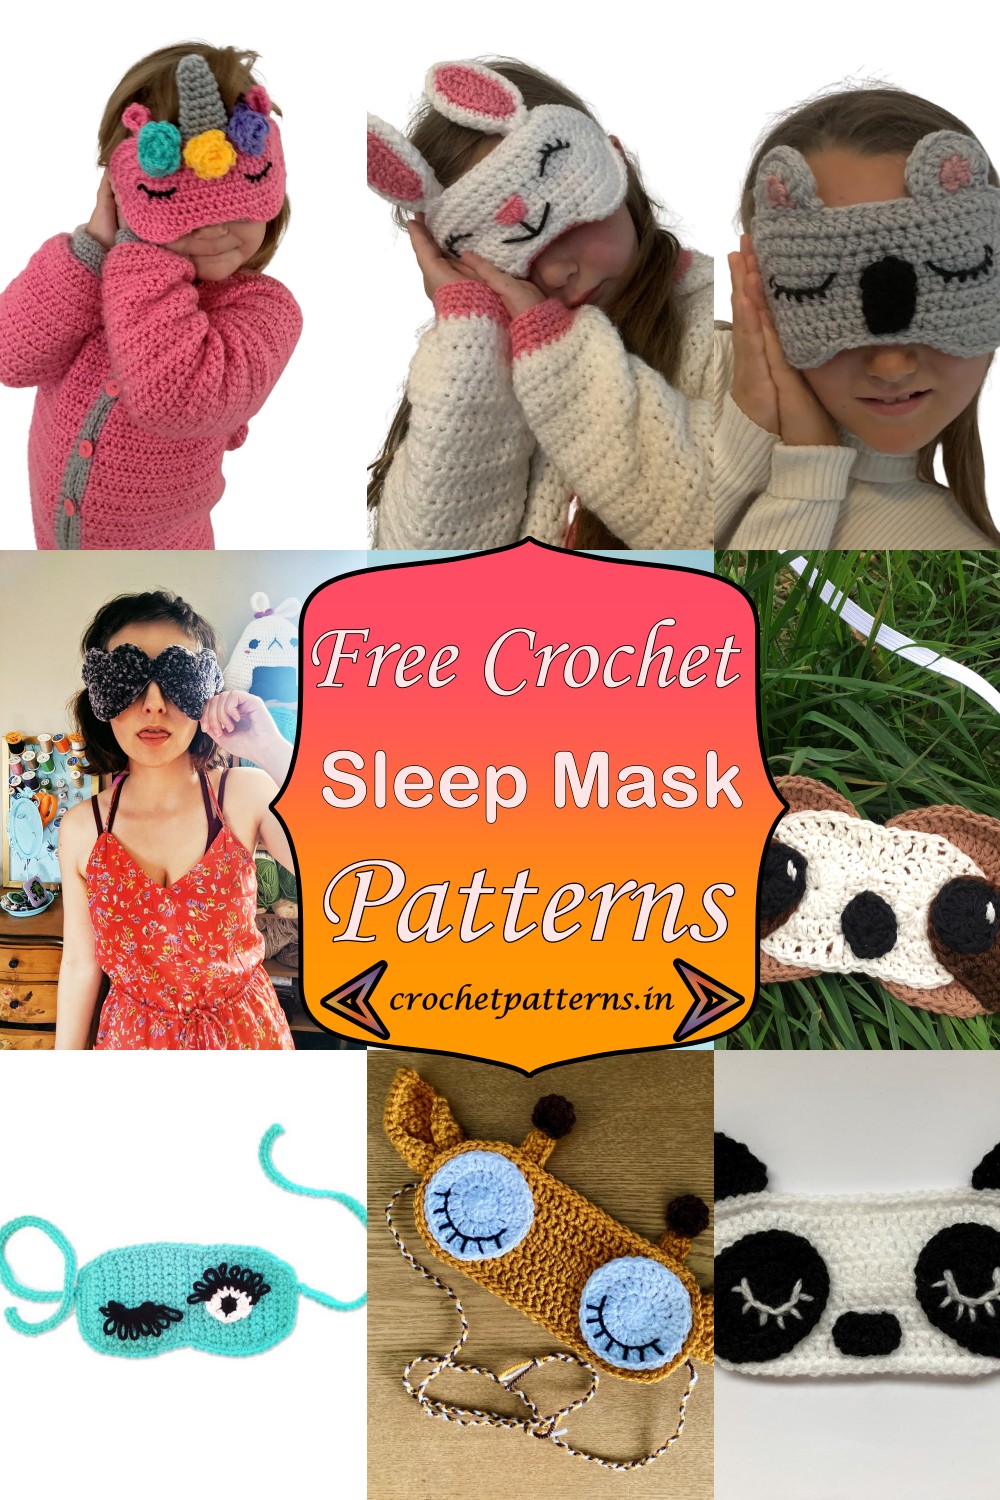 Free Crochet Sleep Mask Patterns